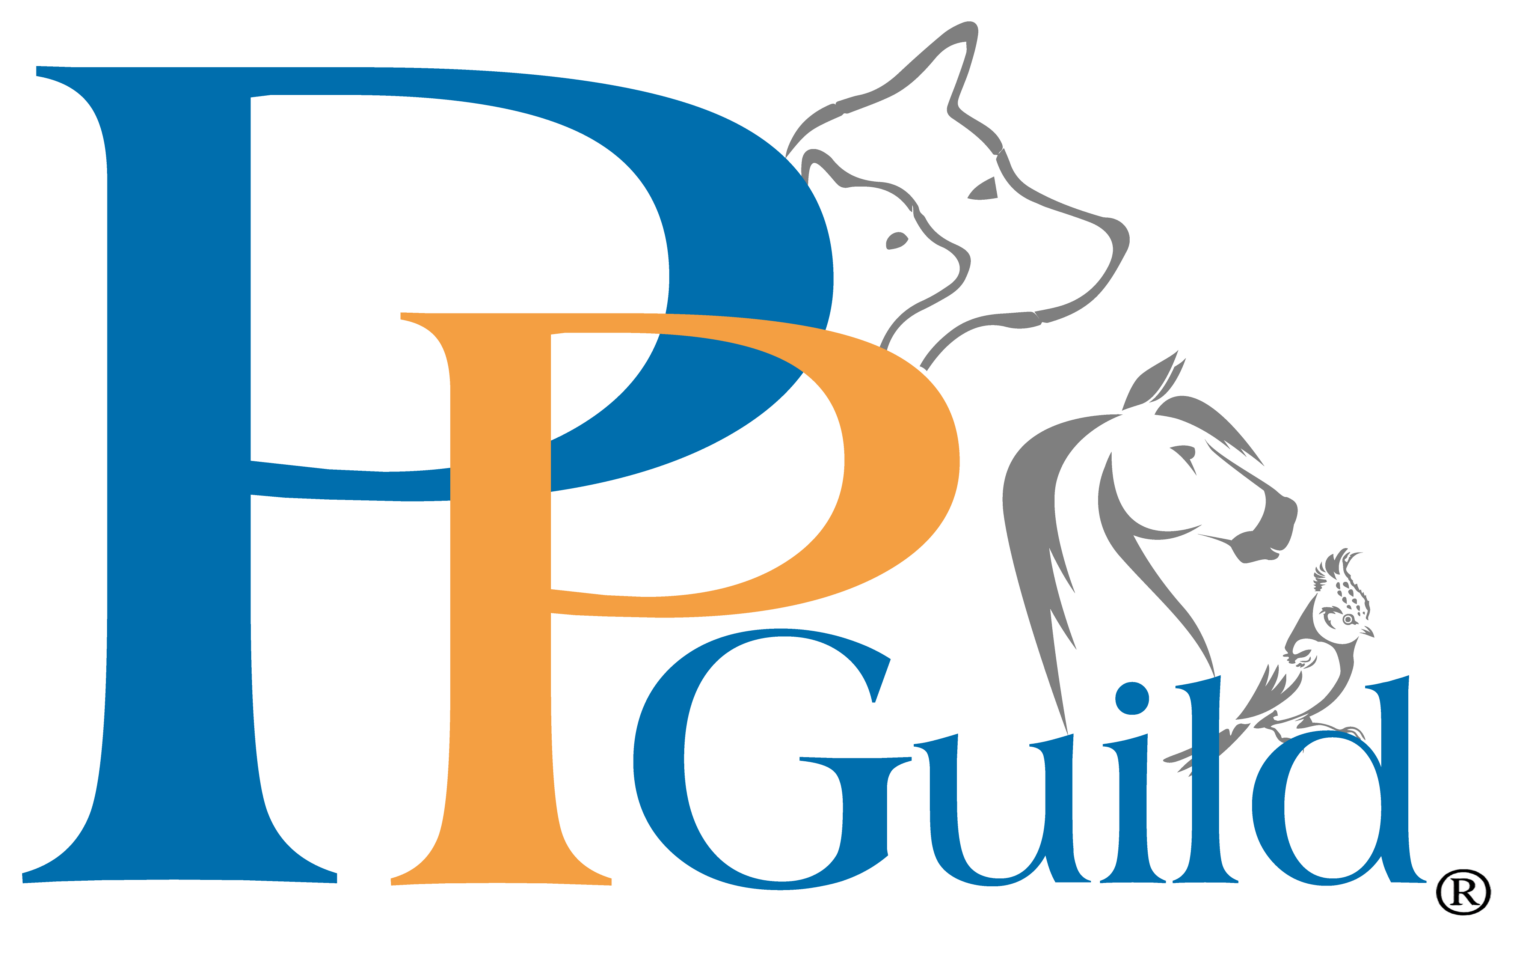 PPG-Logos, 29.4.24.png